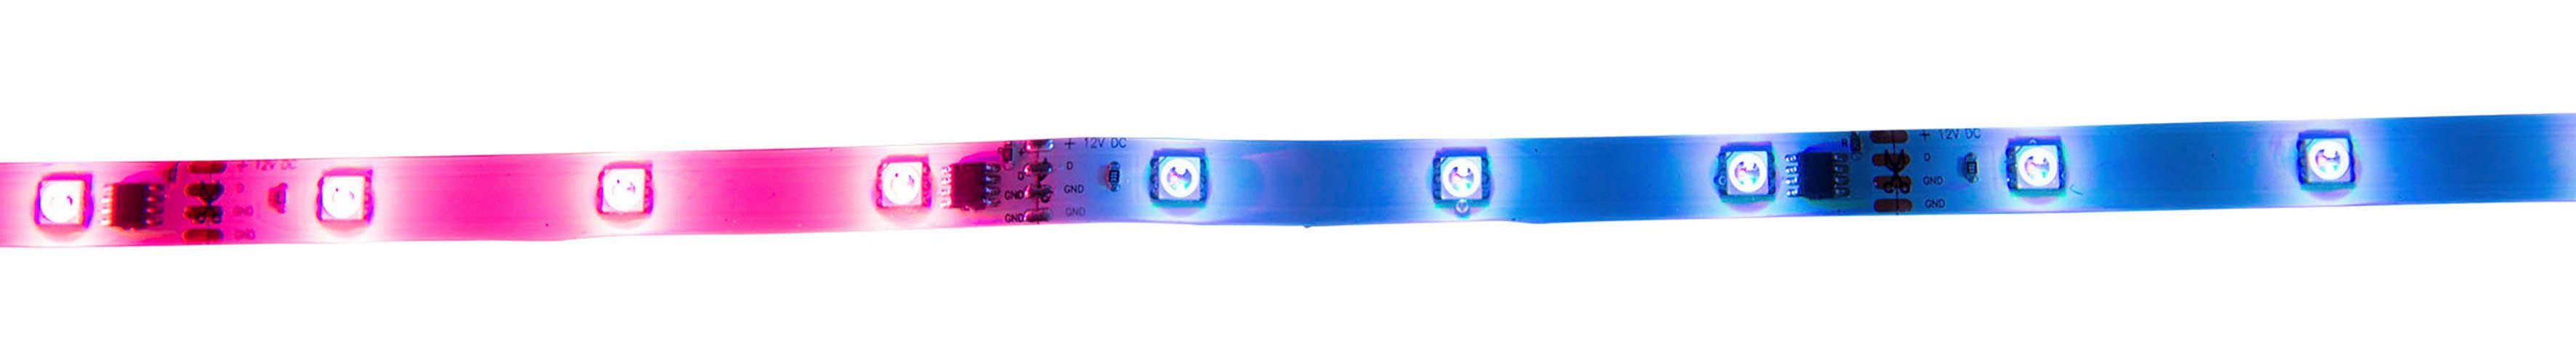 näve LED-Streifen Stripe, Dimmbar, 19W 5m, IP20, 1-flammig, LED Stripe Infrarot-Fernbedienung, RGB